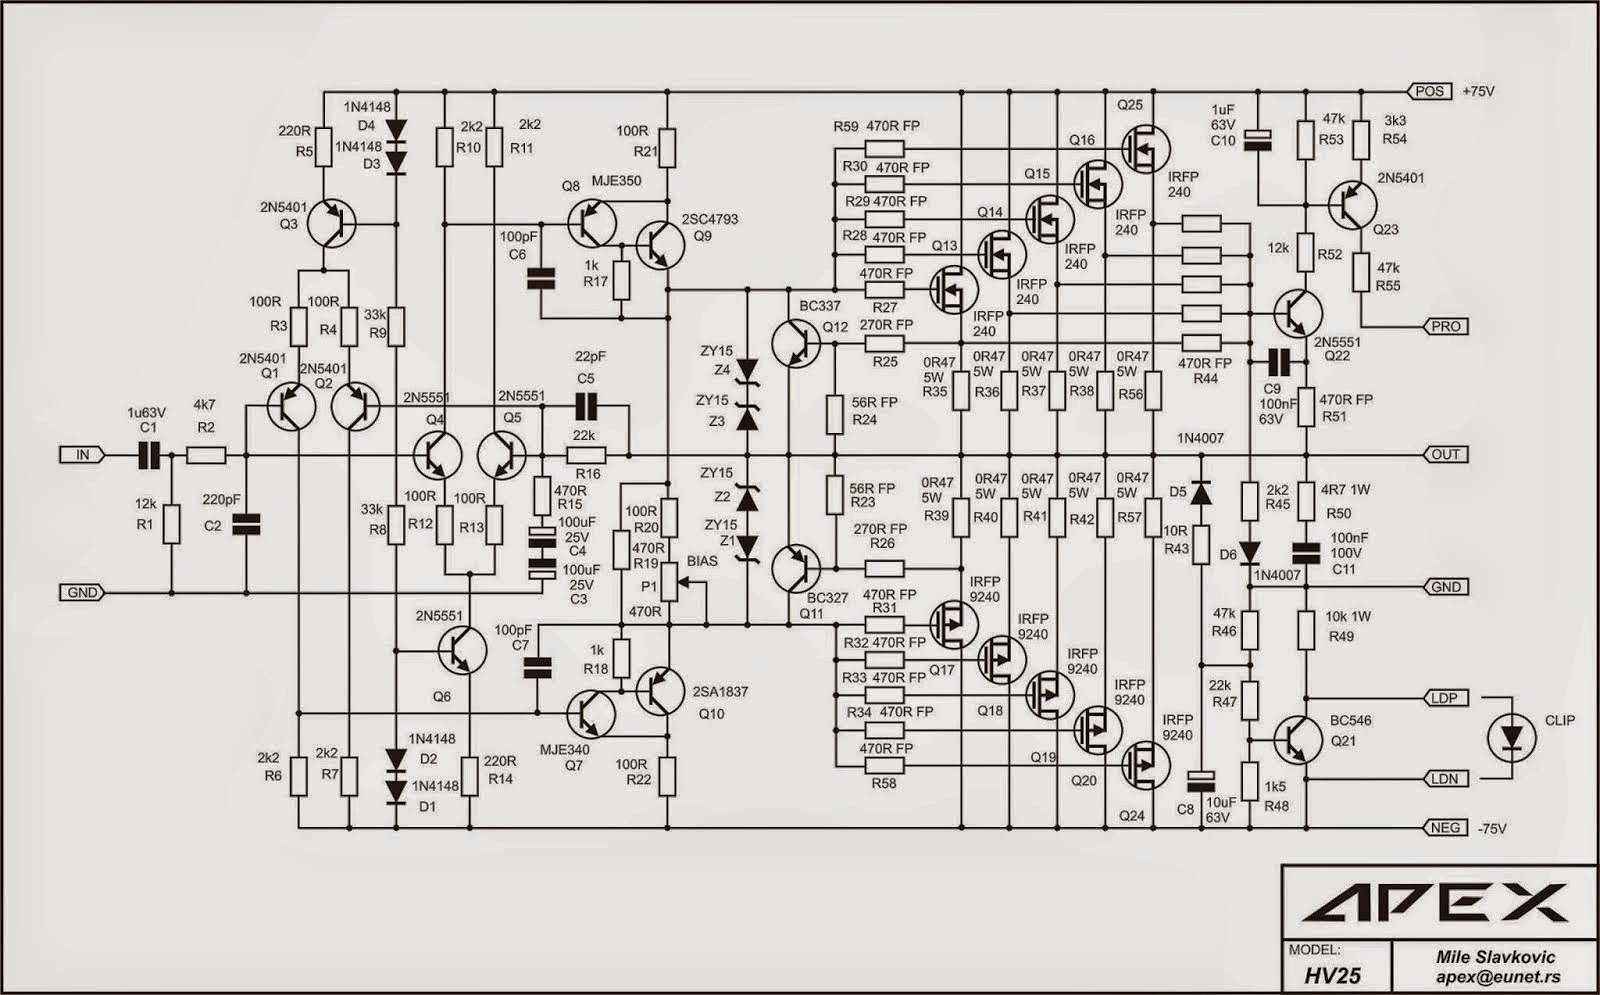 Rangkaian Power  Amplifier Mosfet  Circuit Diagram Images